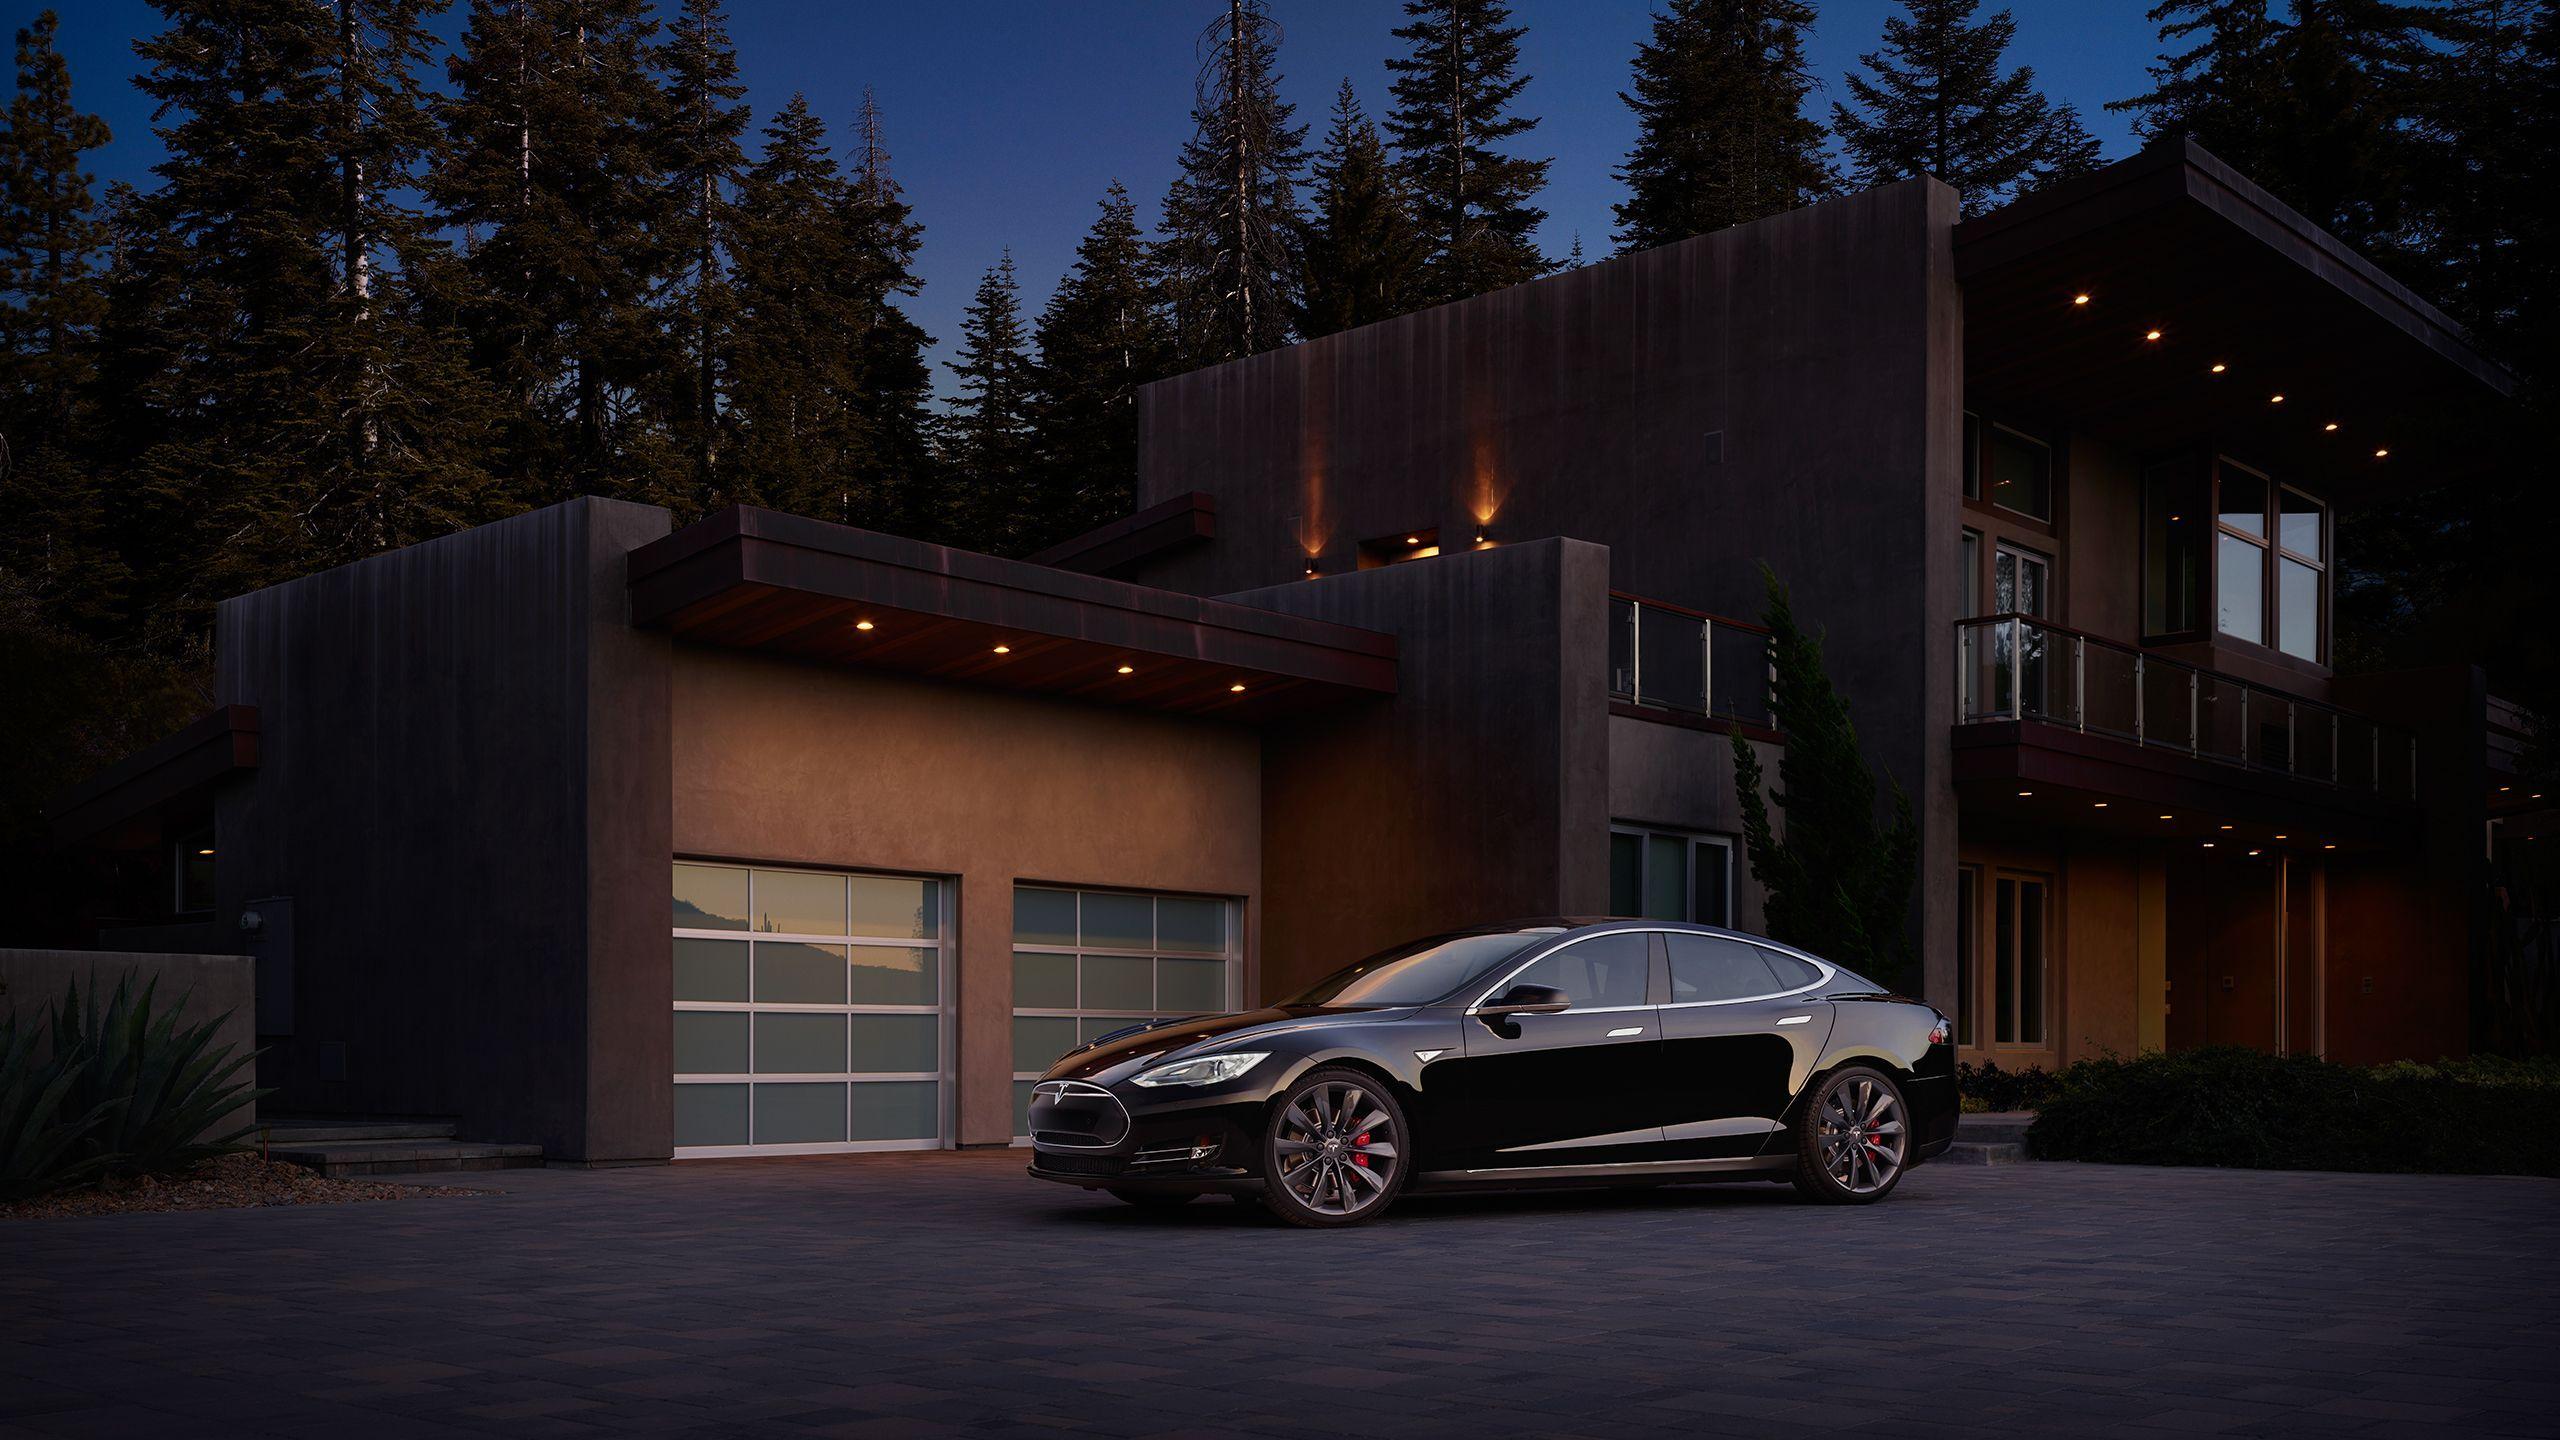 Wallpaper Wednesday: Tesla Model S